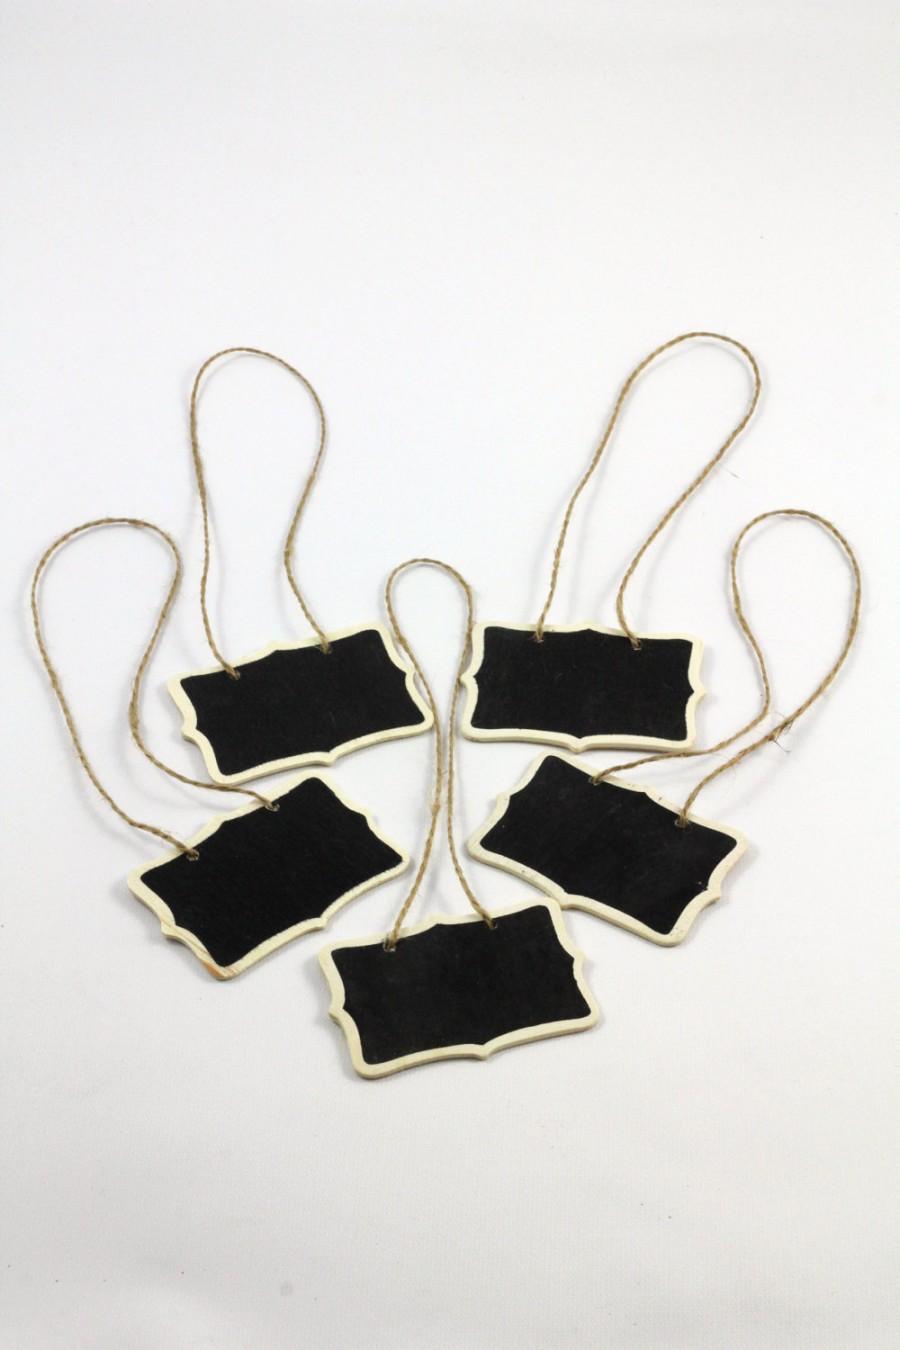 زفاف - SALE - Set of 5  - Mini Chalkboard Hanging Tags - Cottage Chic - Package embellishment  - Gift Tags Favor Tags - DearSeed